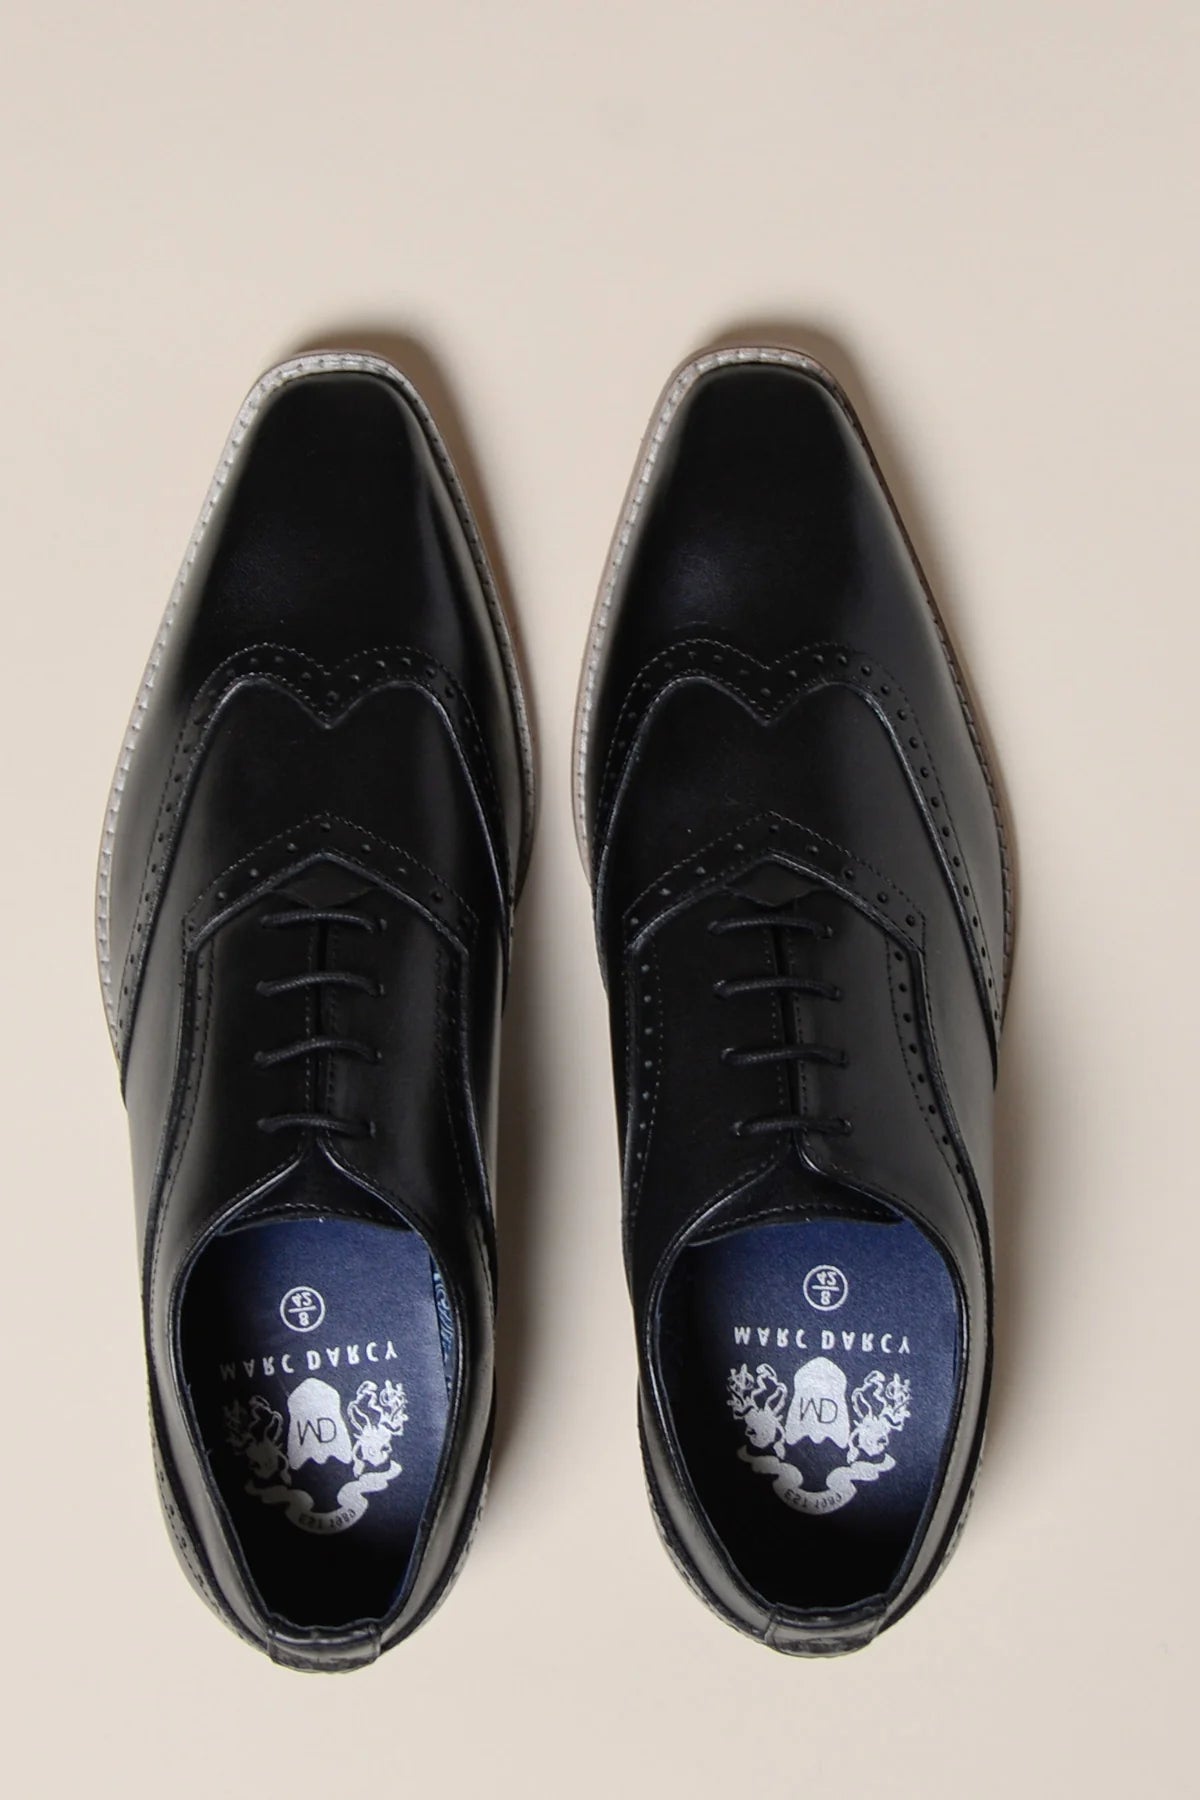 Chaussures en cuir noir, Marc Darcy Dawson - Wingtip brogue